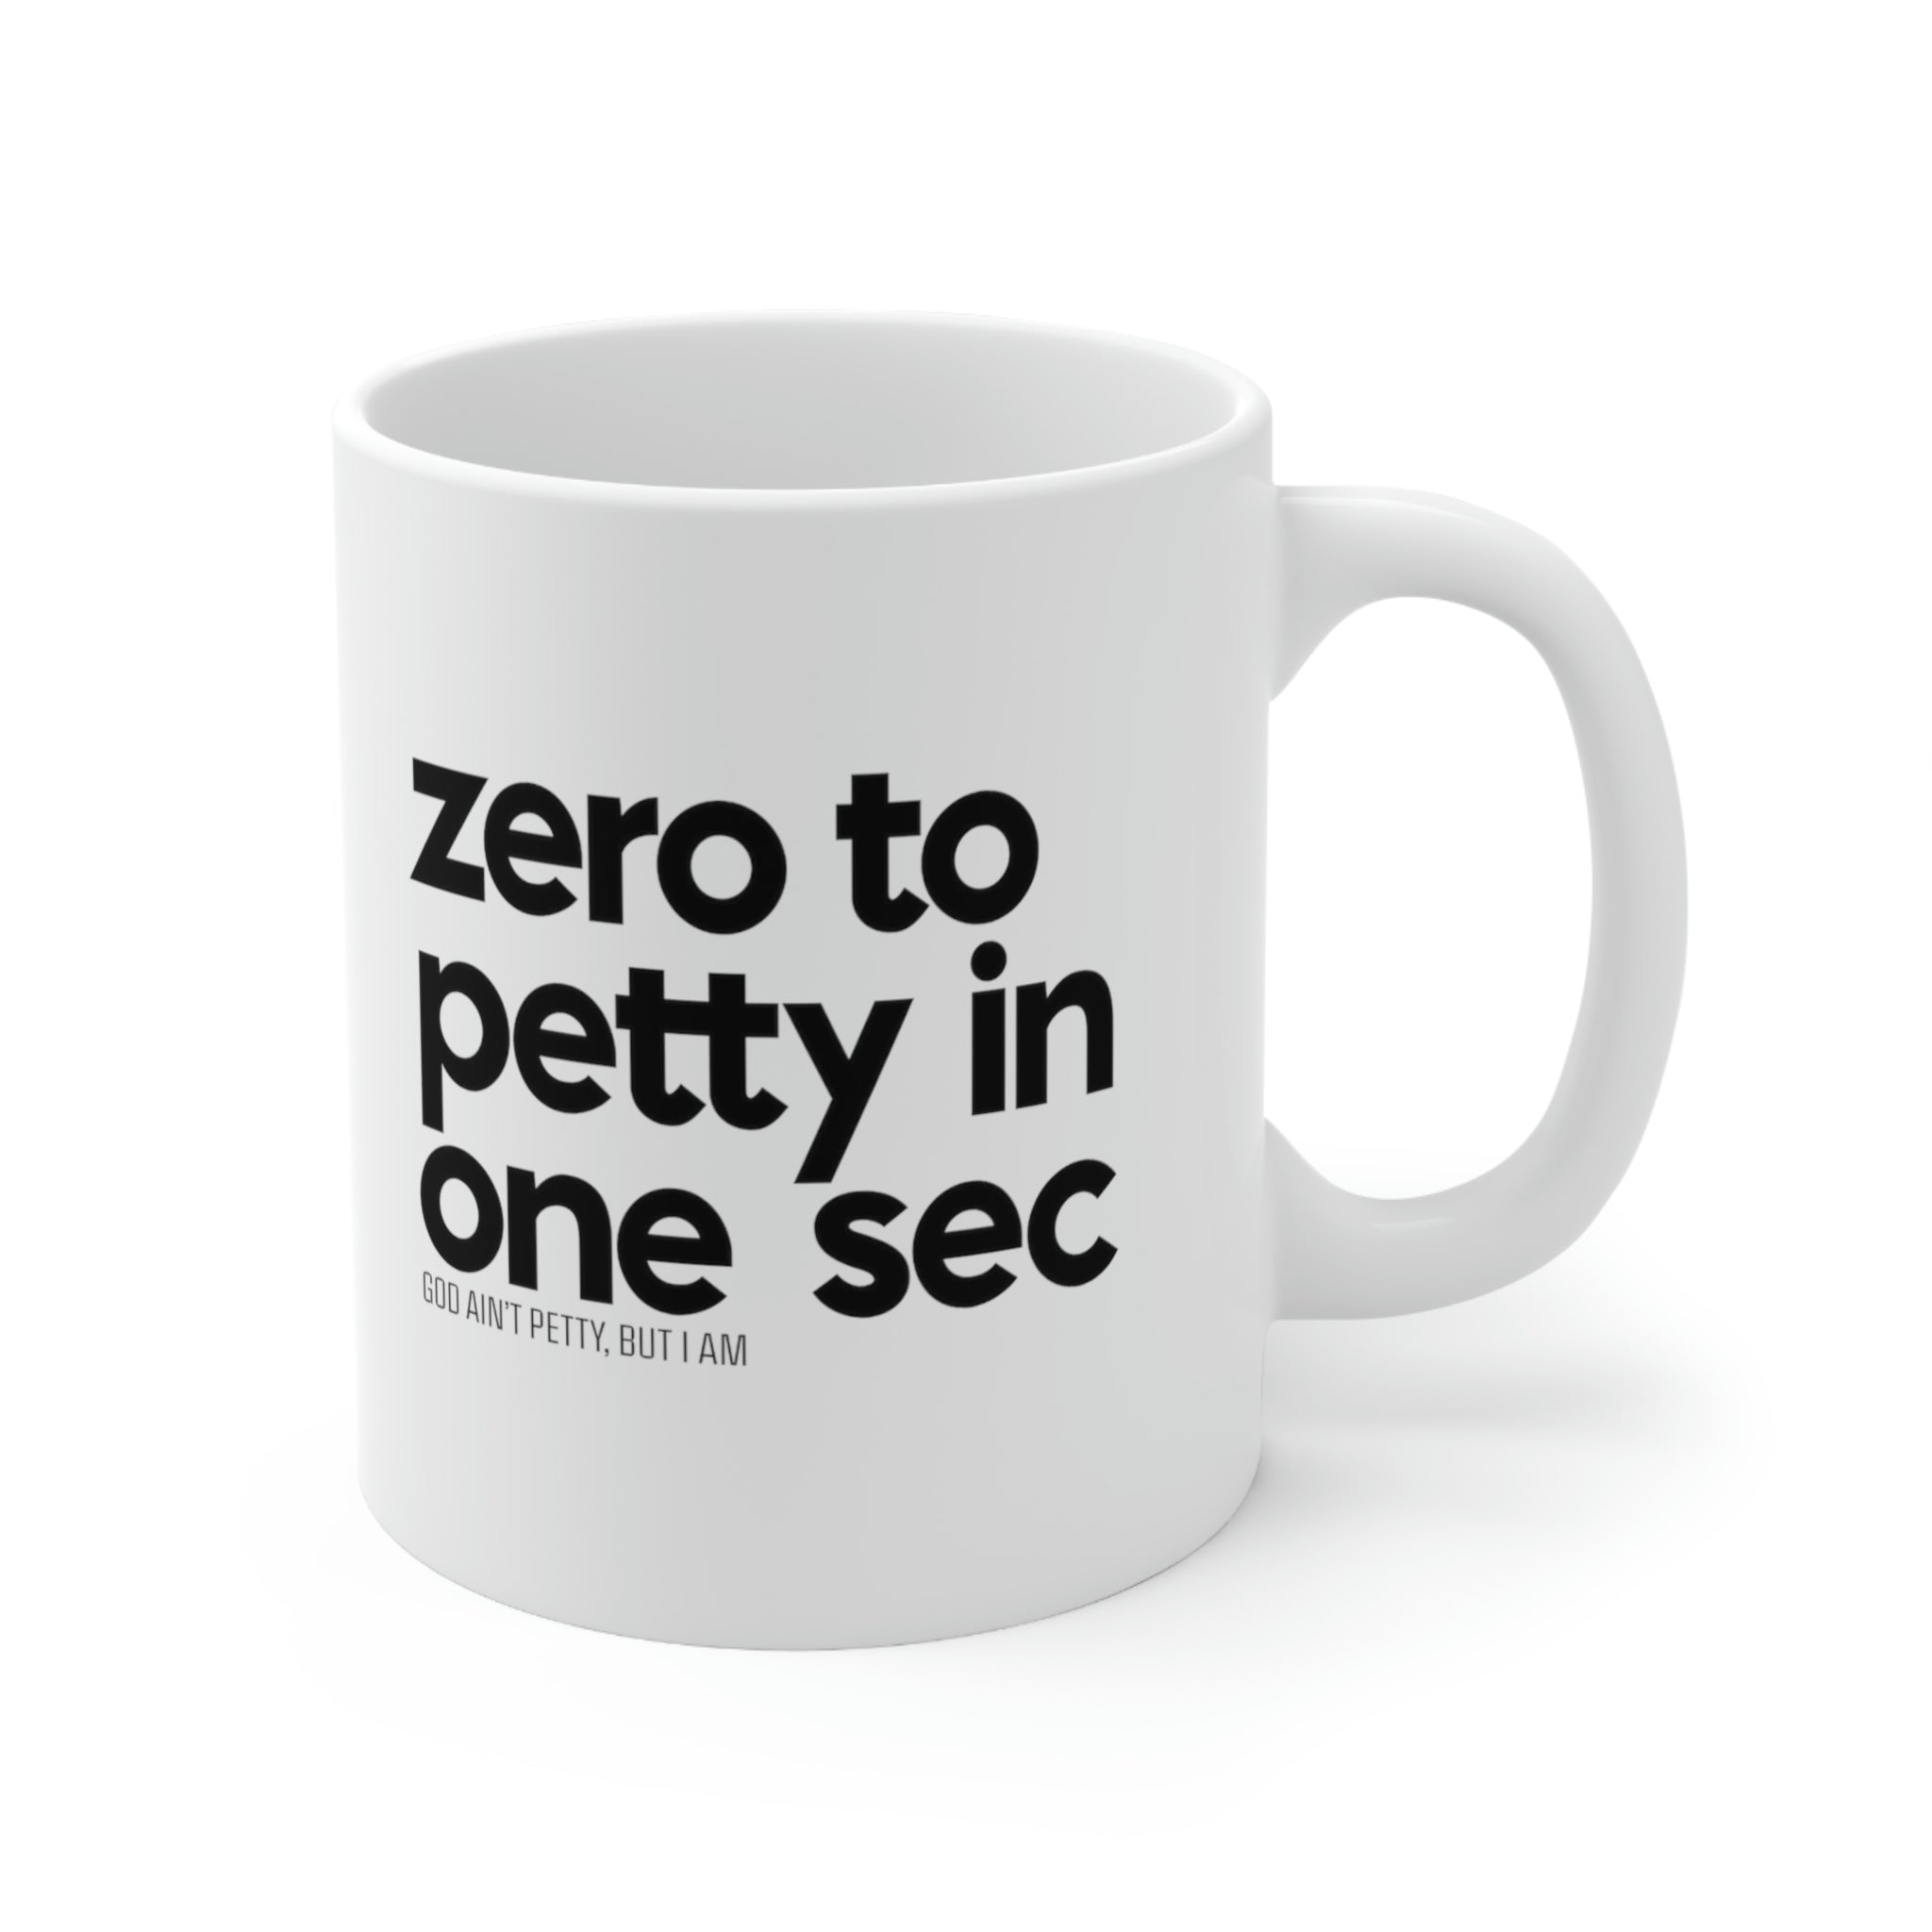 Zero to petty in one sec Mug 11oz (White/Black)-Mug-The Original God Ain't Petty But I Am